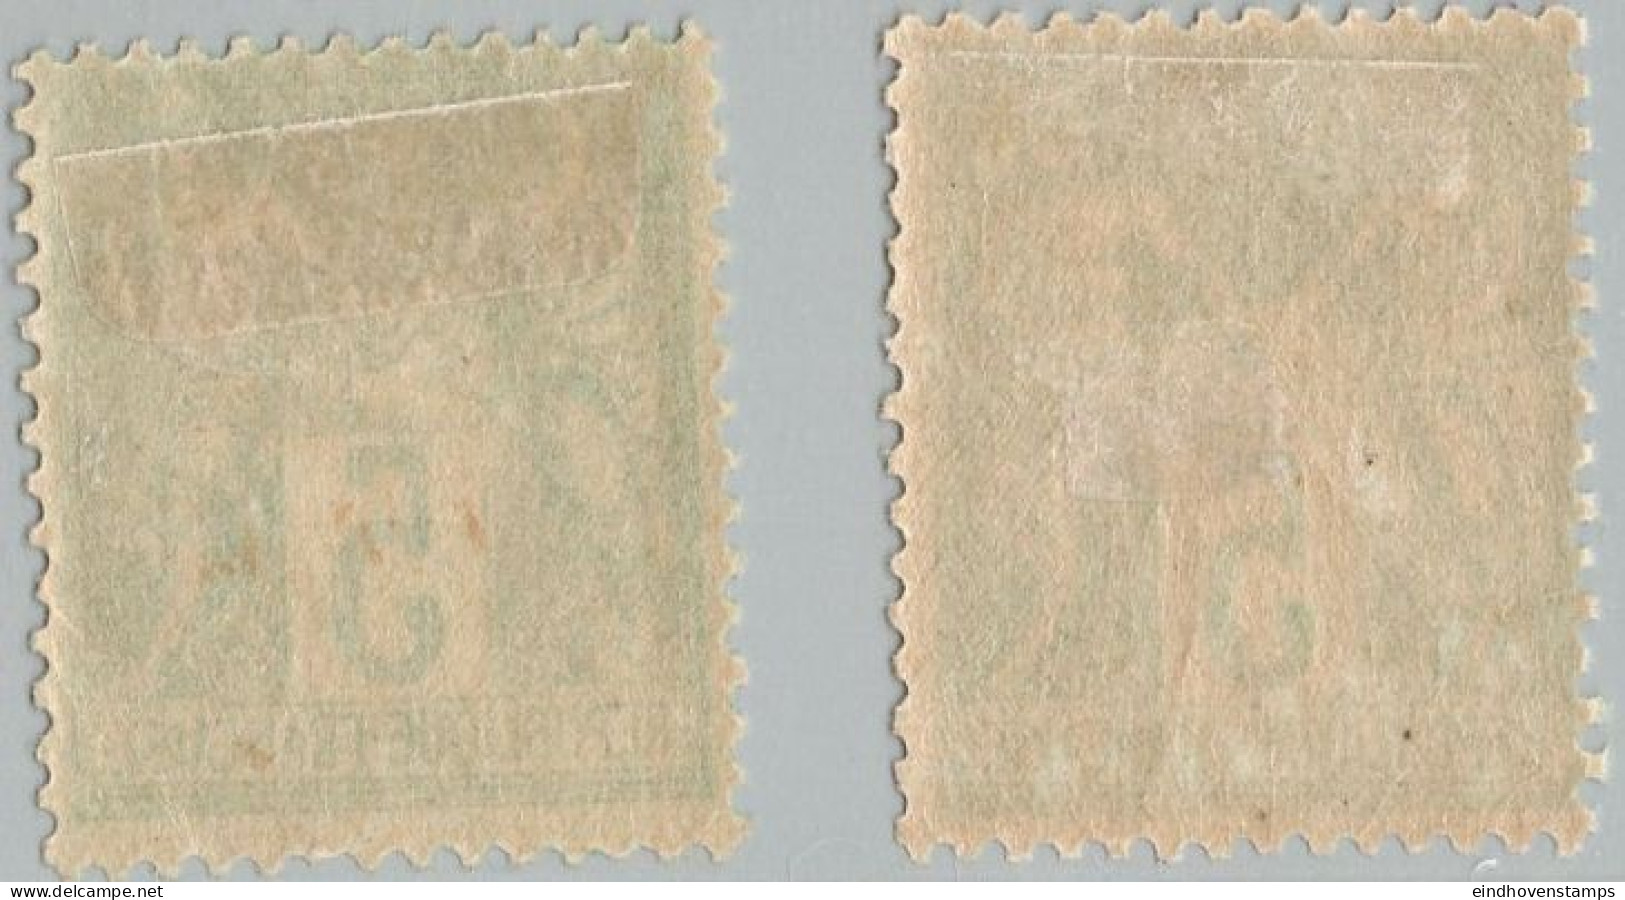 France 1898 5 C Yellow Green Sage Type III 2 Shades (N Below B) MH - 1898-1900 Sage (Type III)